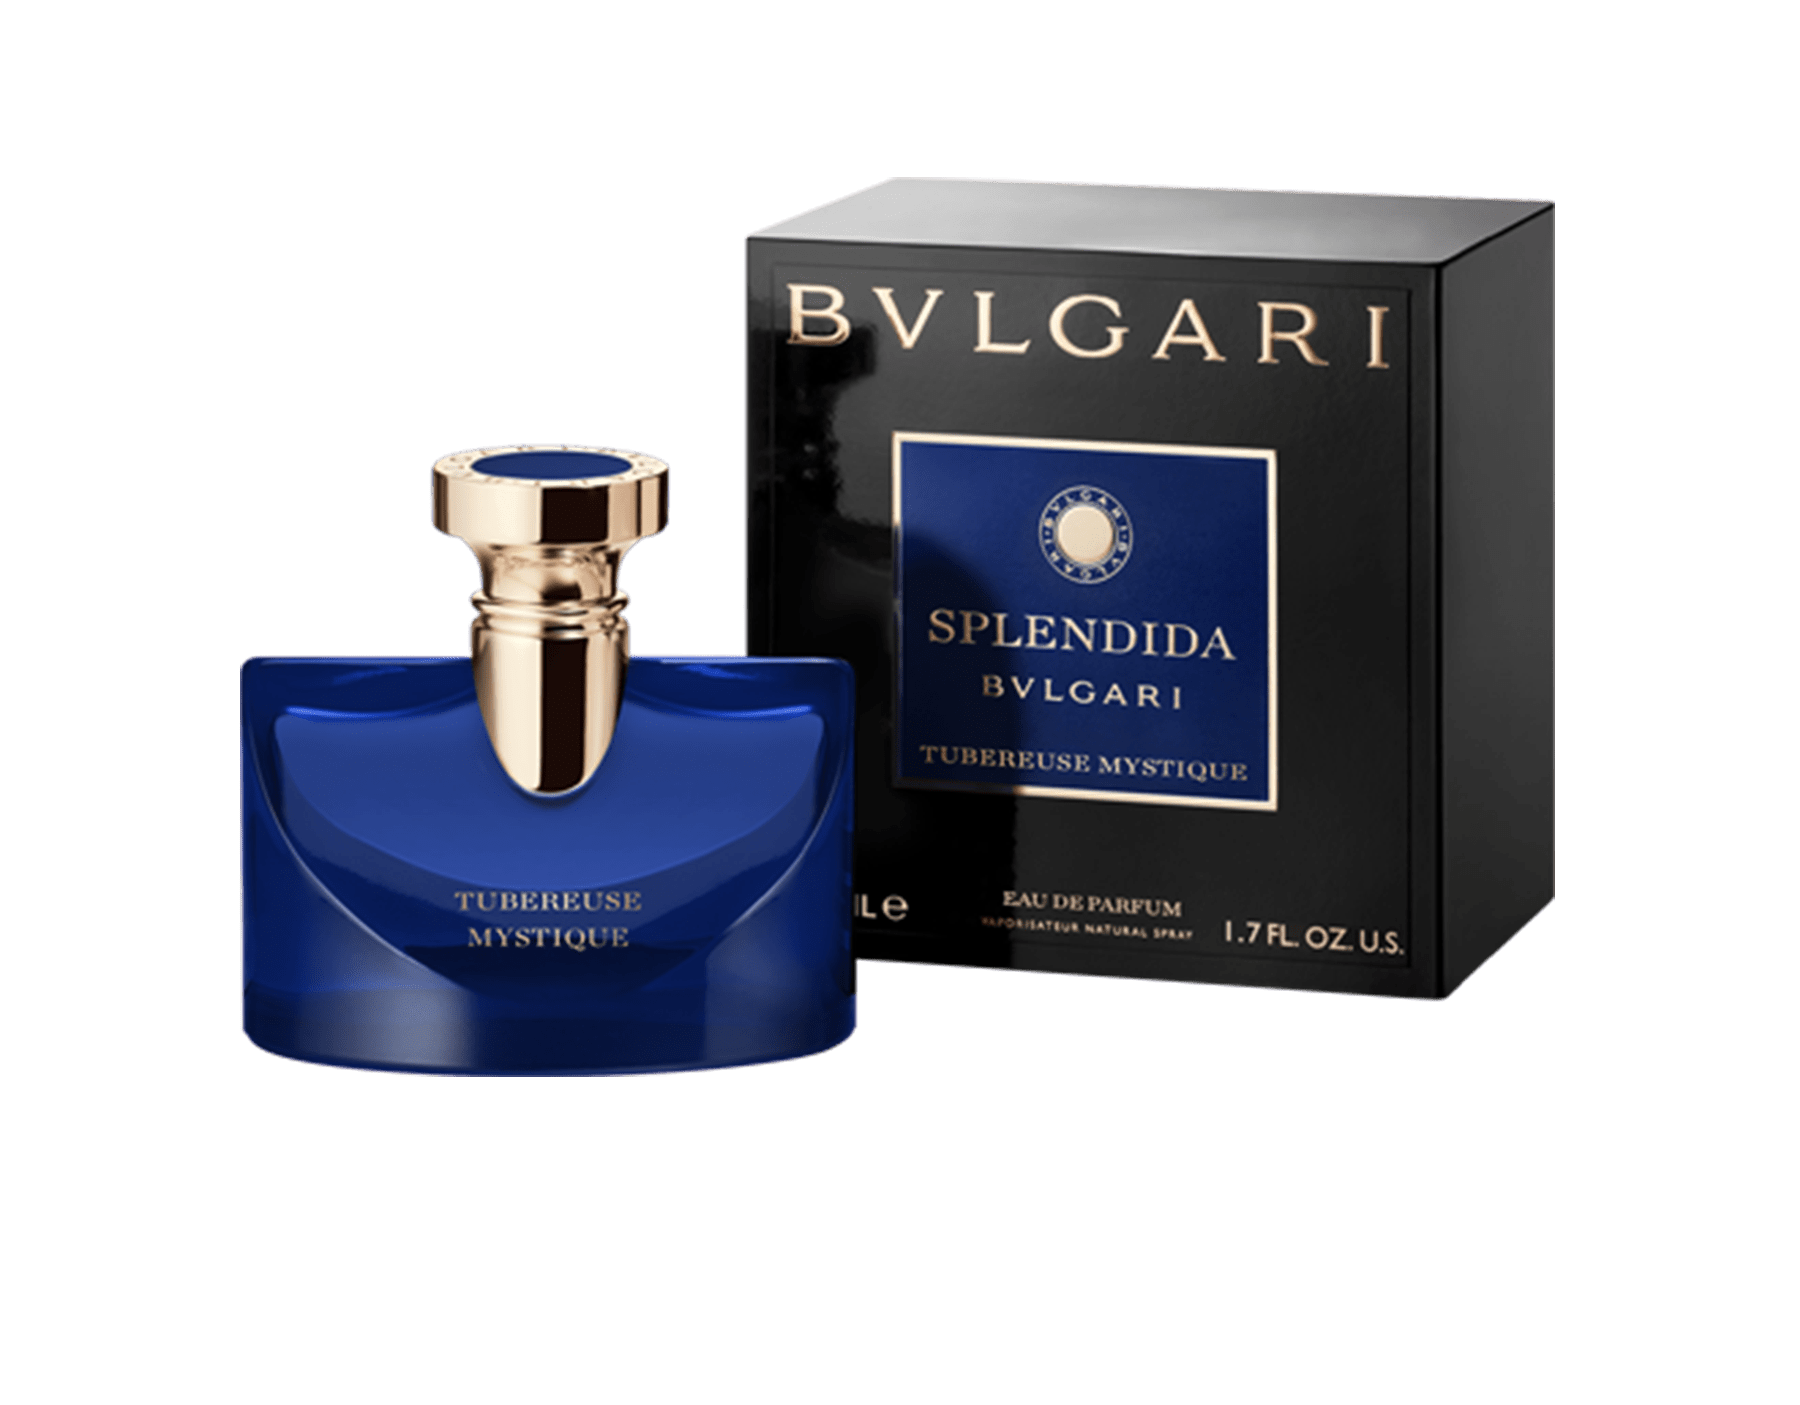 is bvlgari perfume good